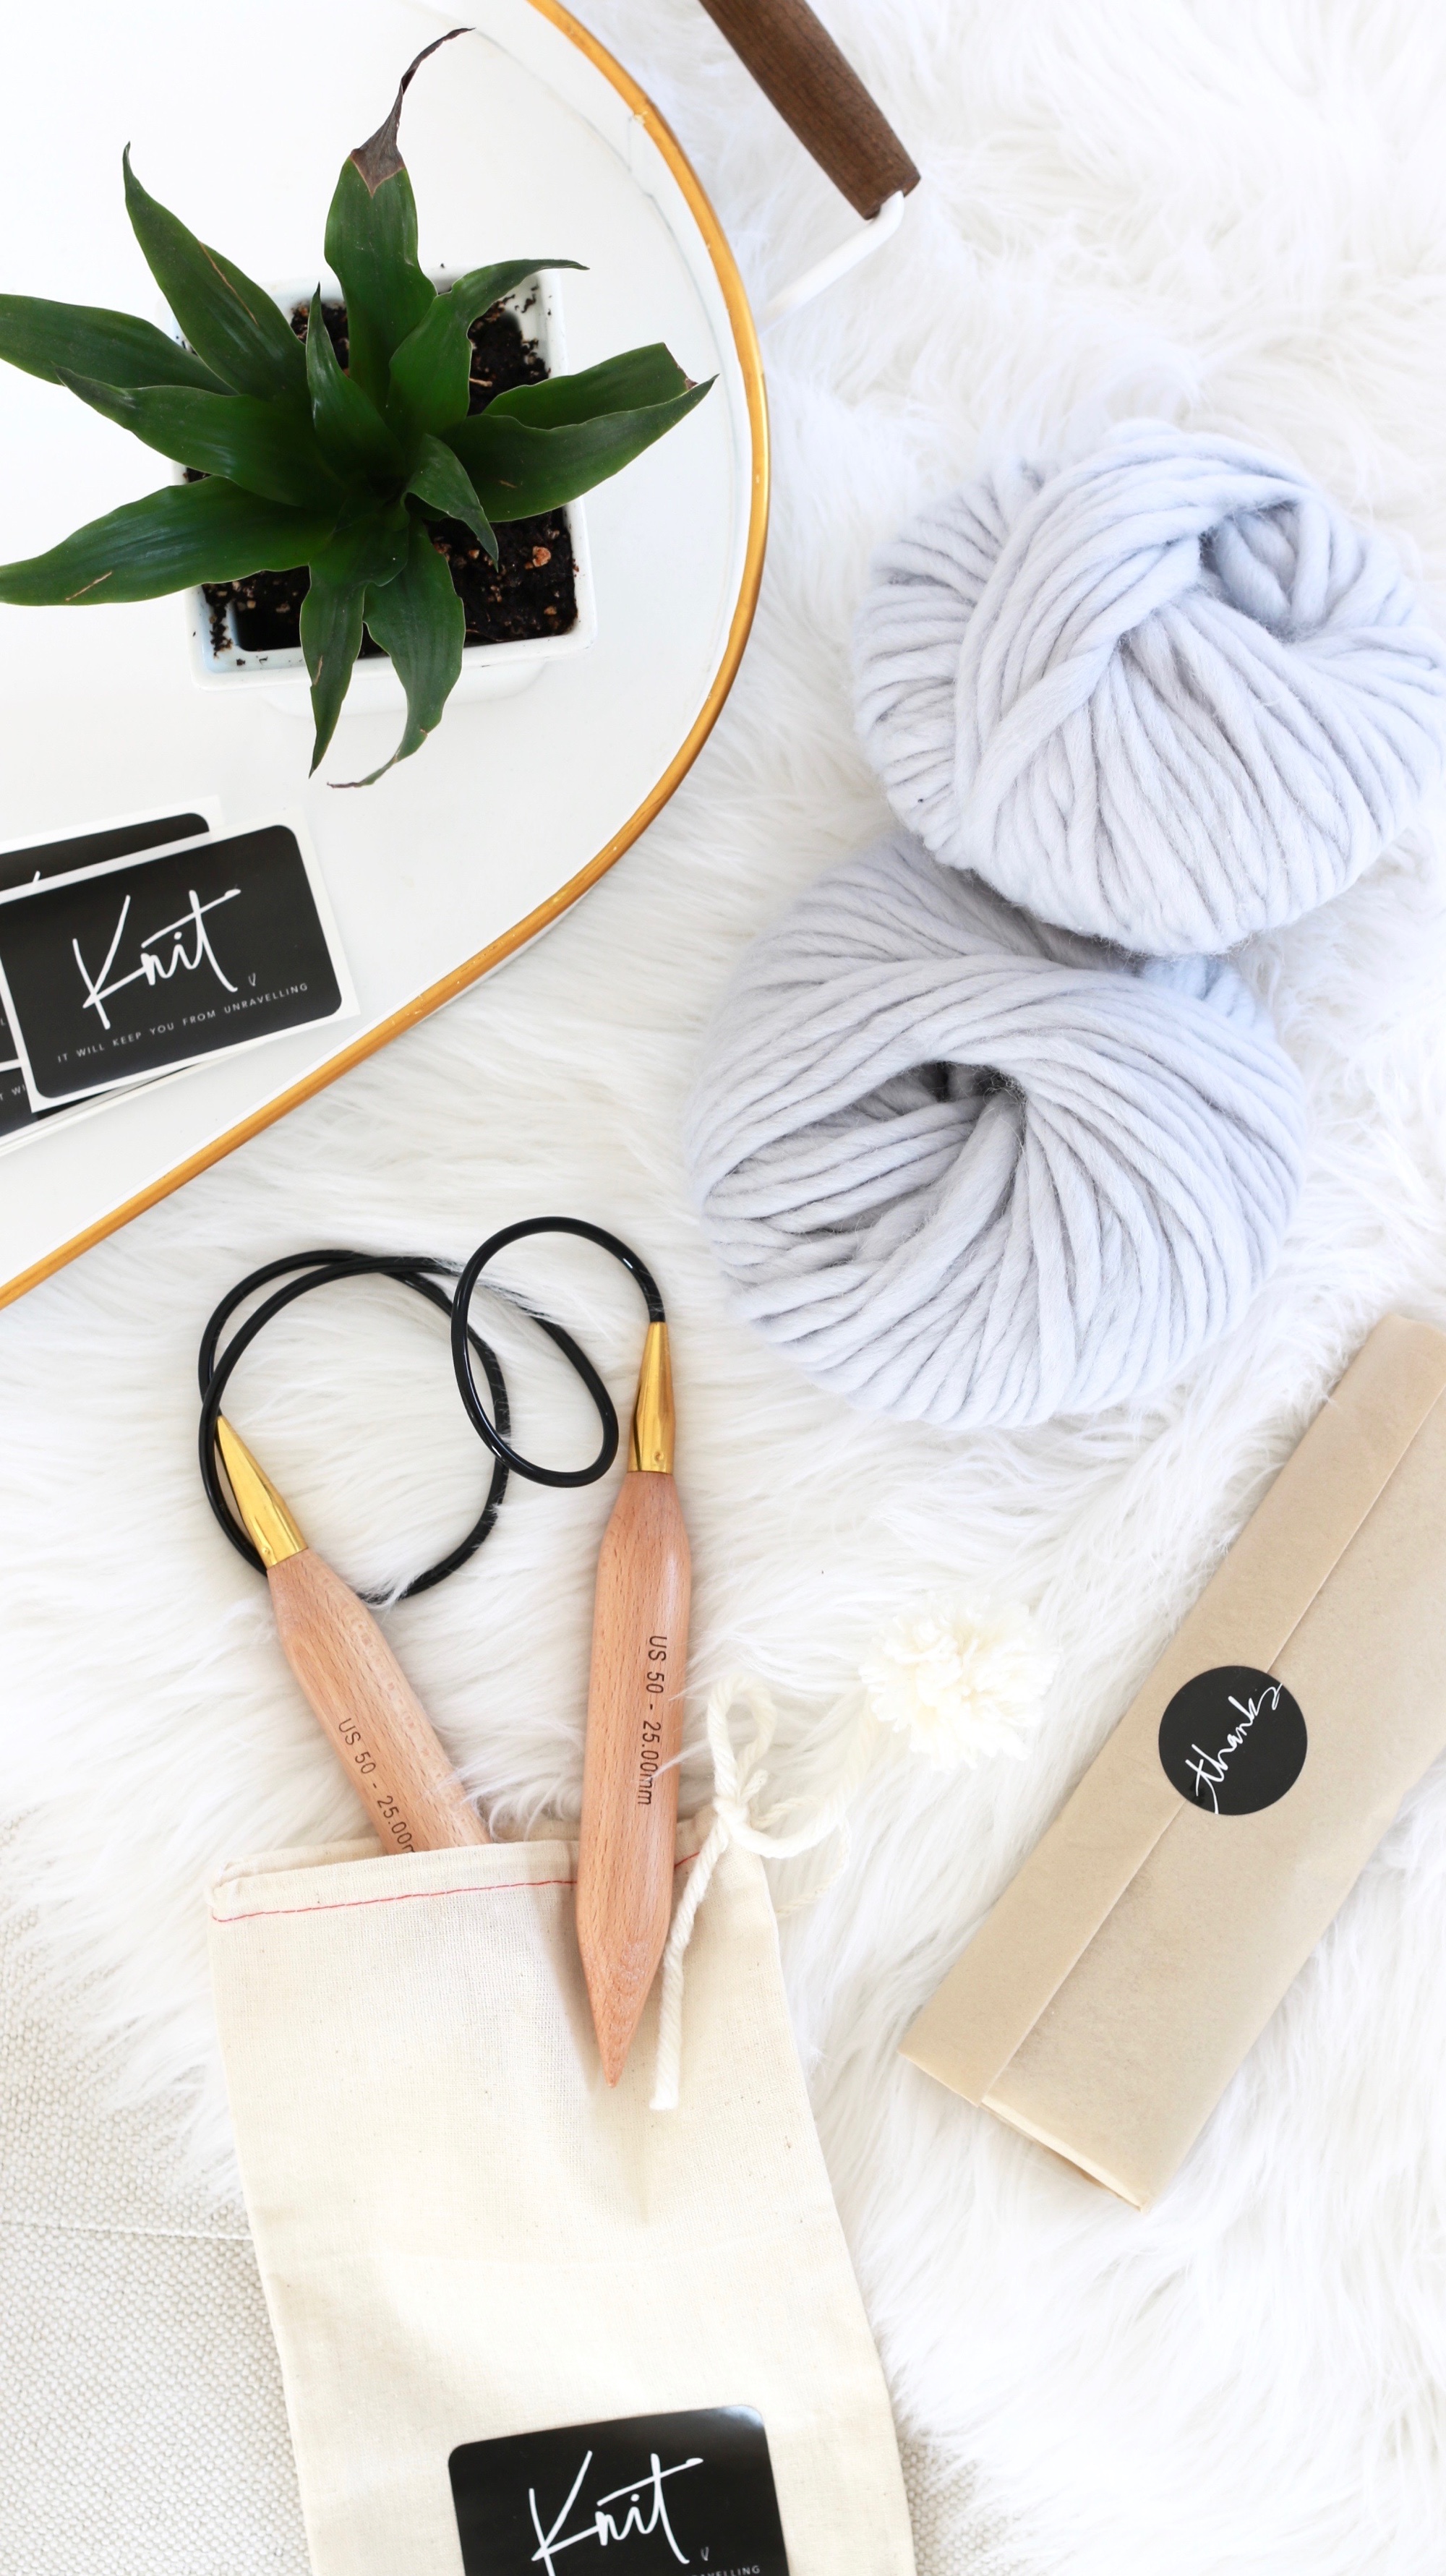 Circular birch knitting needles for free chunky wool blanket pattern via @lynneknowlton